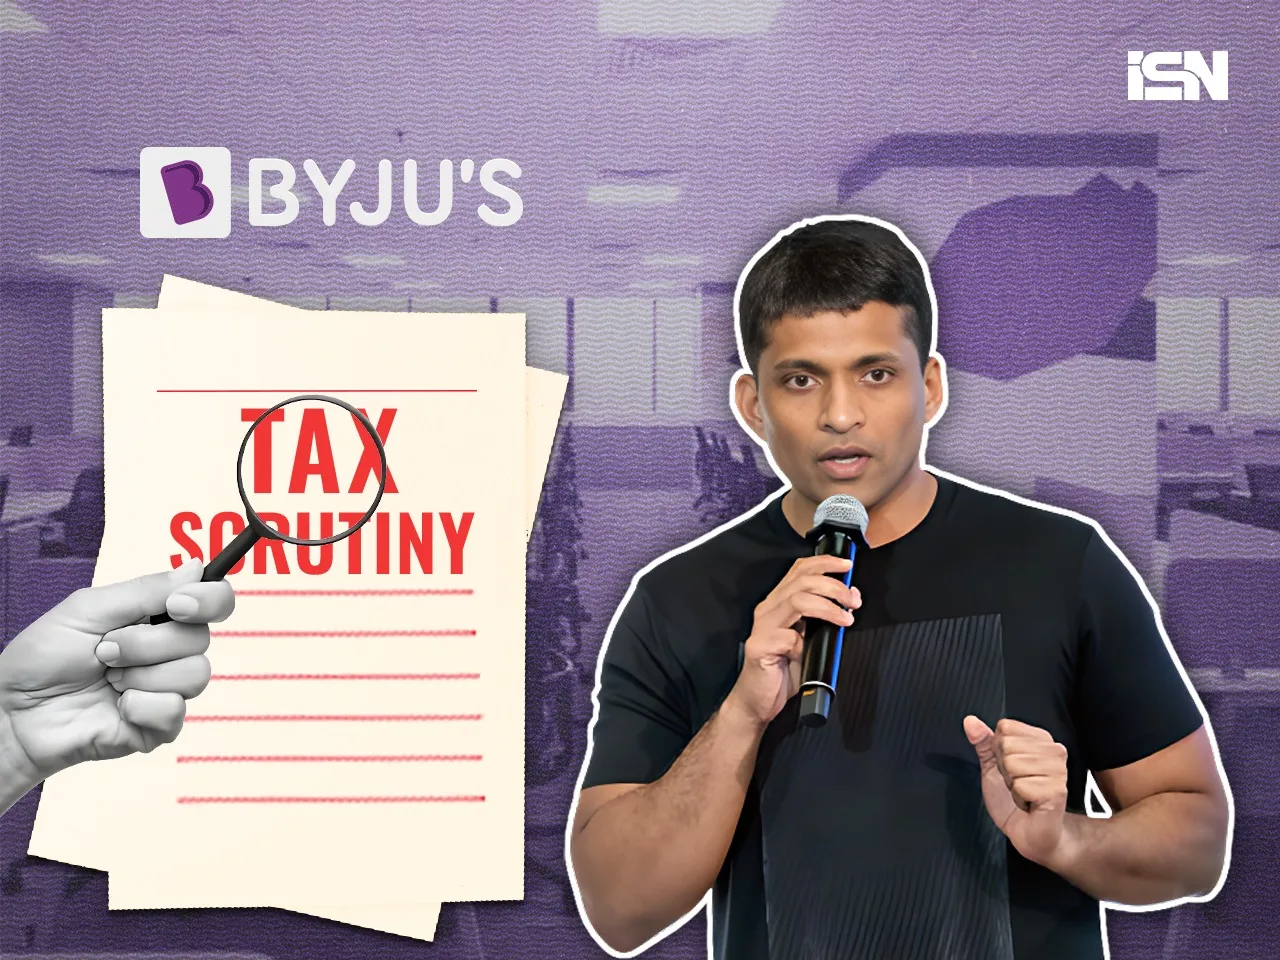 byjus tax scrutiny